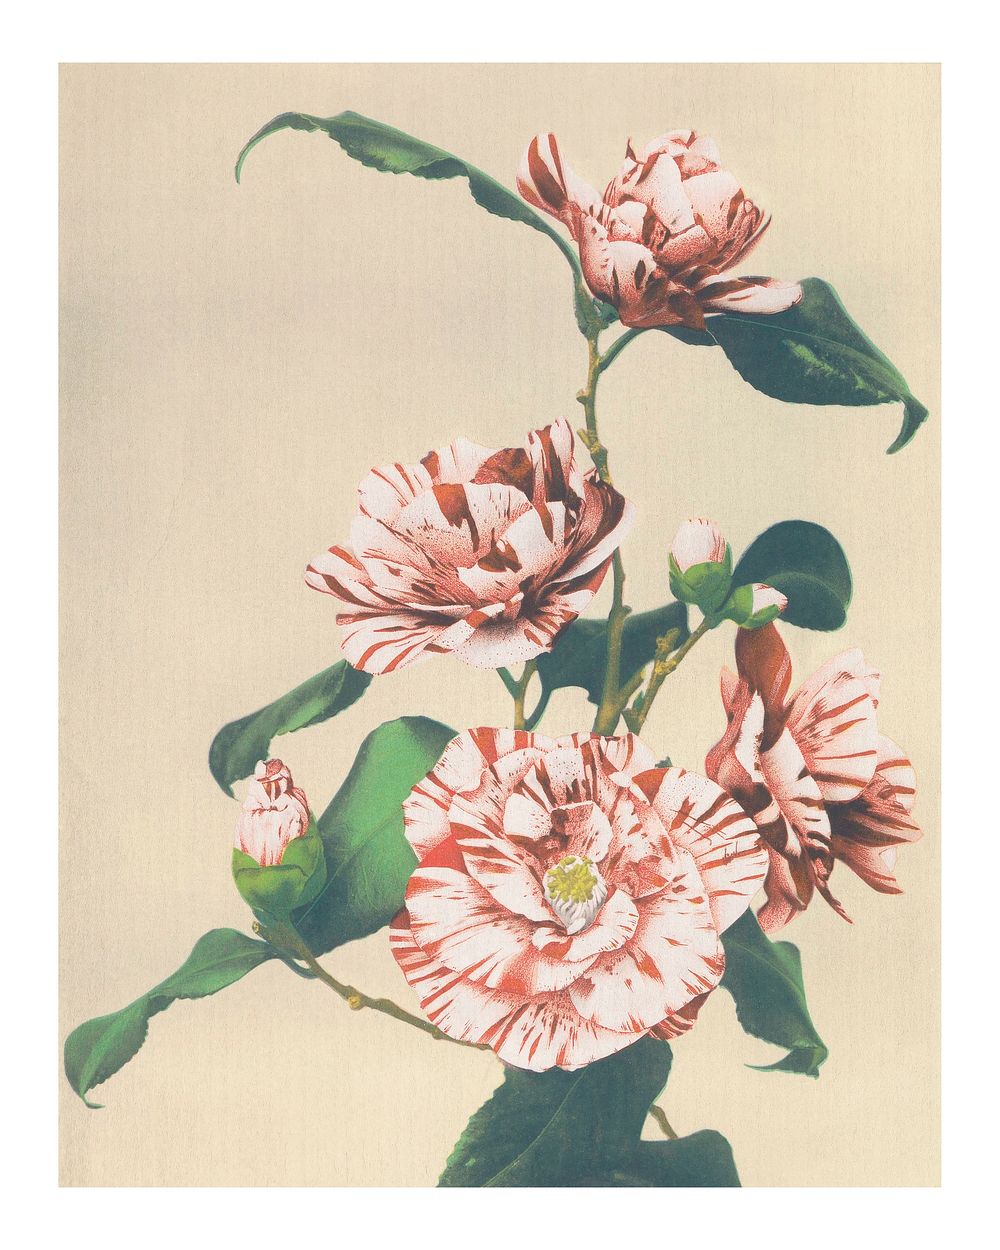 Striped Camellias vintage illustration artwork, remix from original photography.